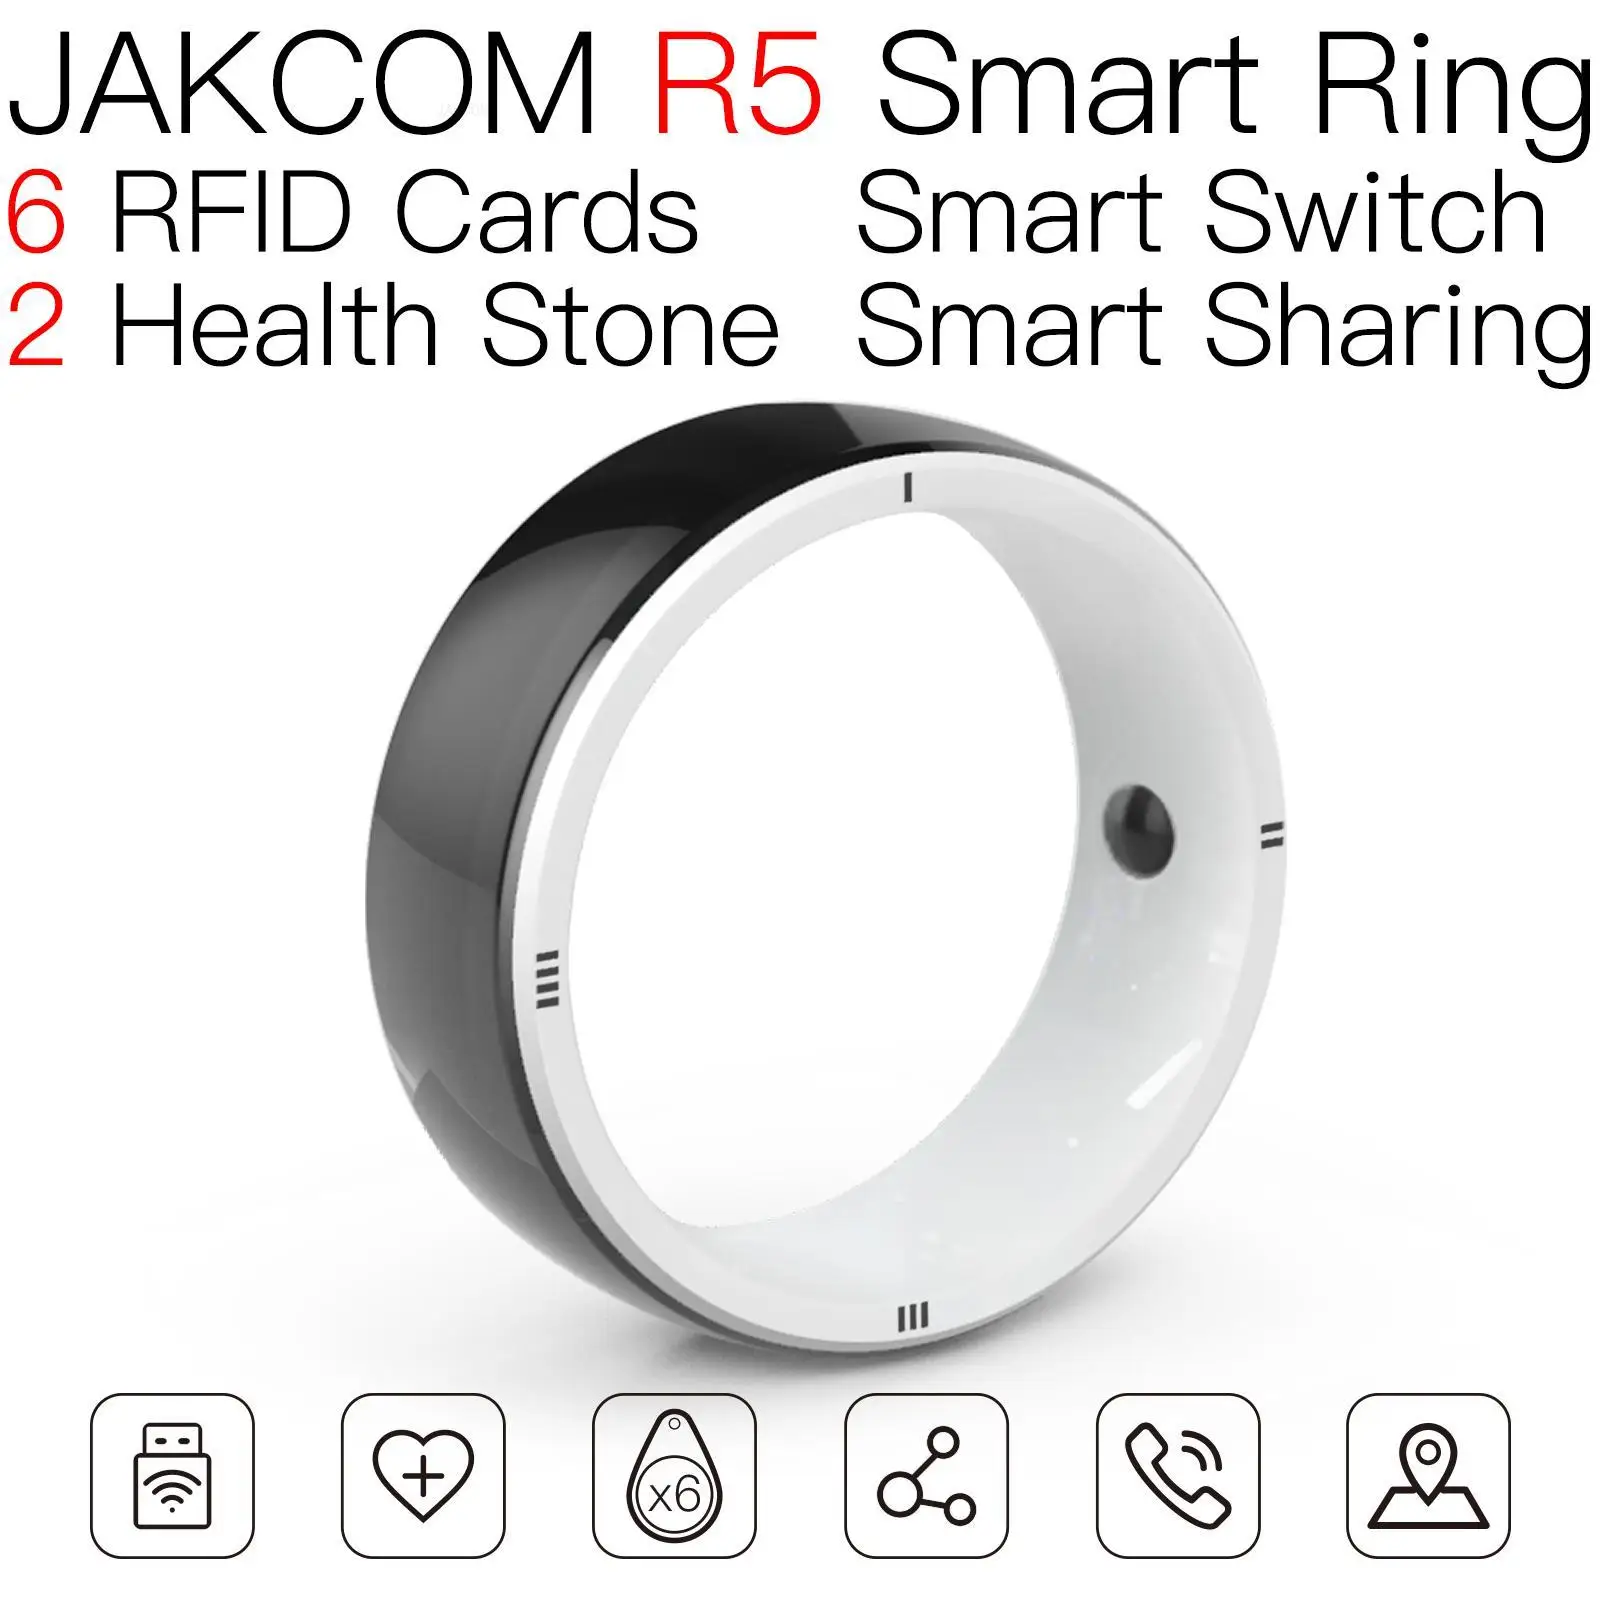 

JAKCOM R5 Smart Ring Newer than nfc rewritable rfid for usb 1k card print autocollant tag face id jc uhf 6b key fob water alien